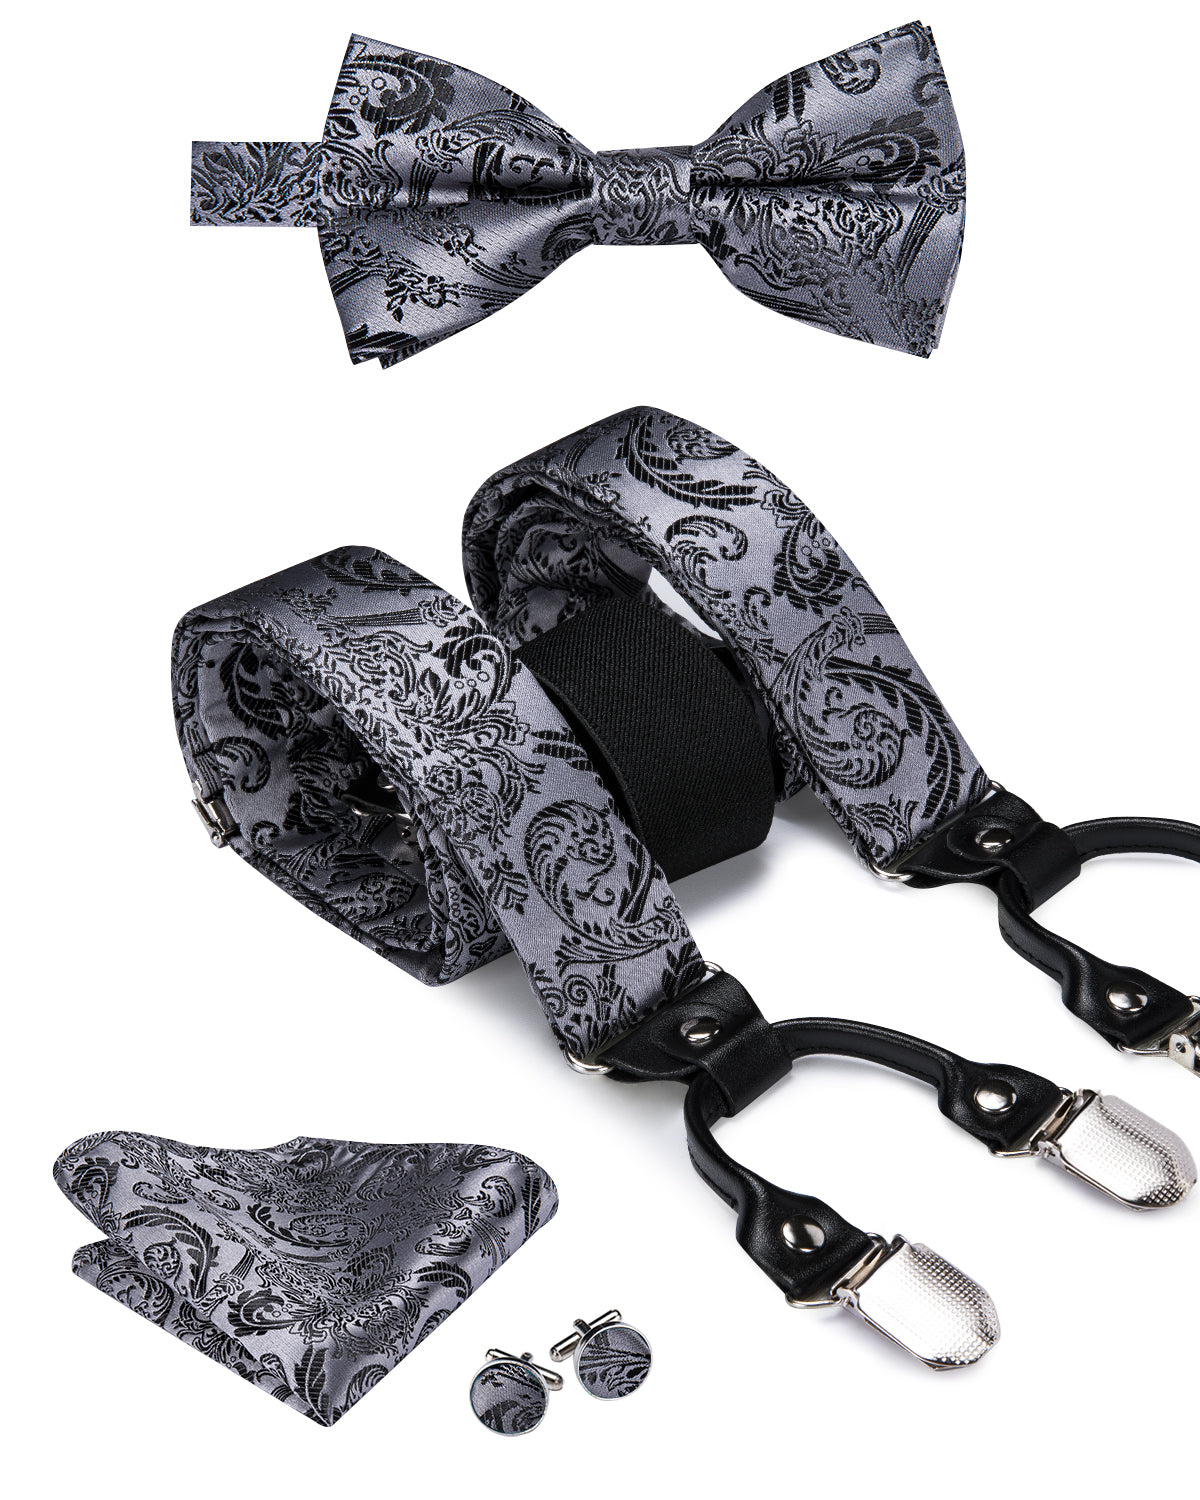 BD3014 Men's Braces Designer Clip Suspender Set [Steel Feather]